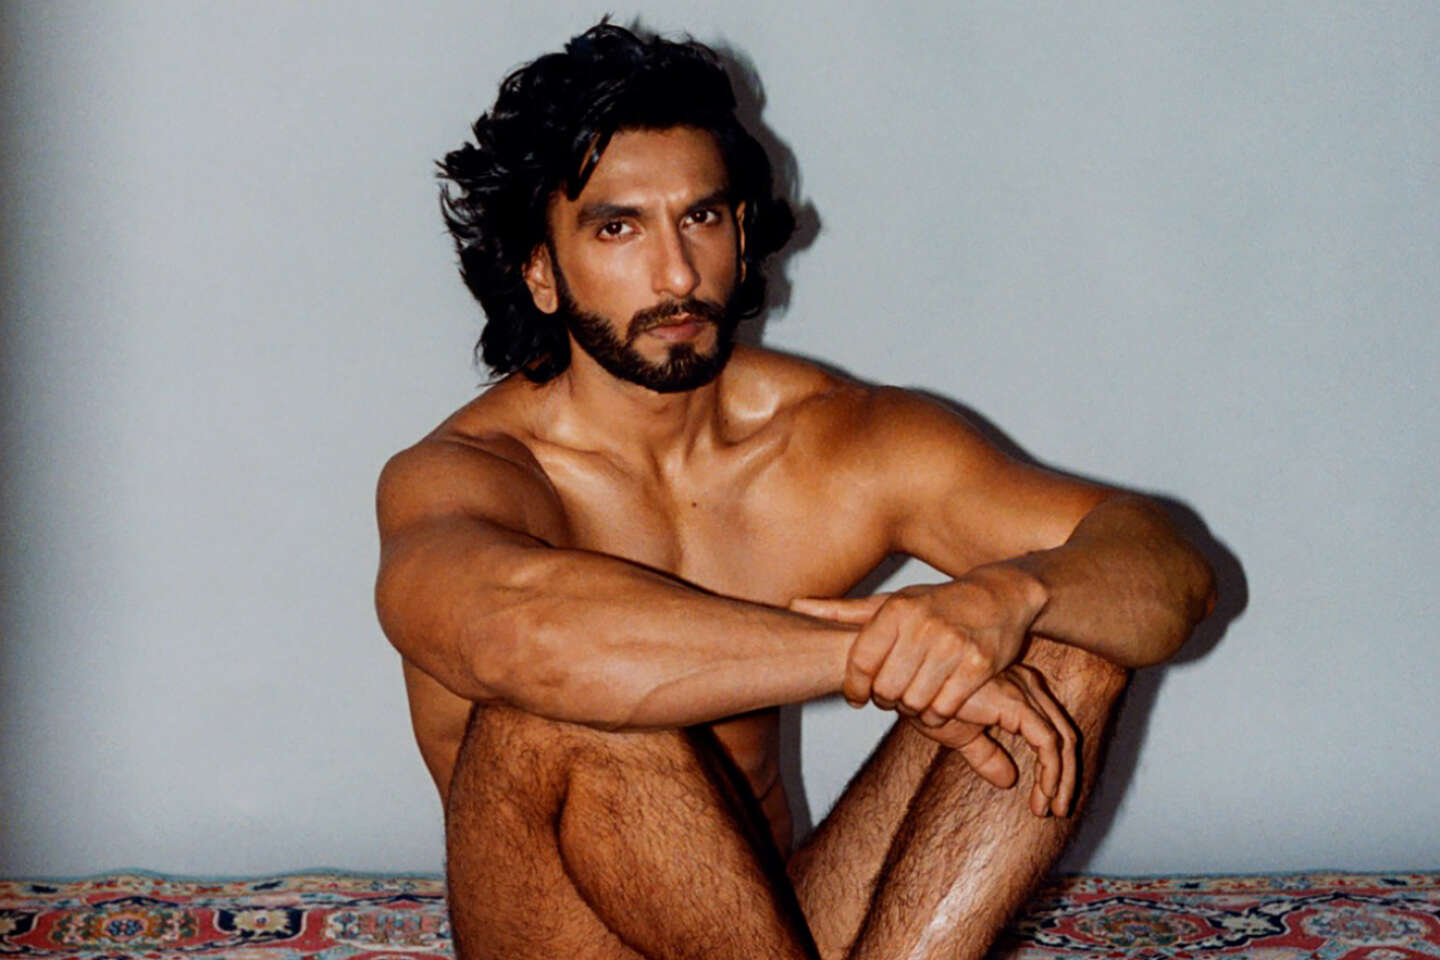 Xxx Com Hindi Silipig - Nude photos of a Bollywood actor are setting India abuzz